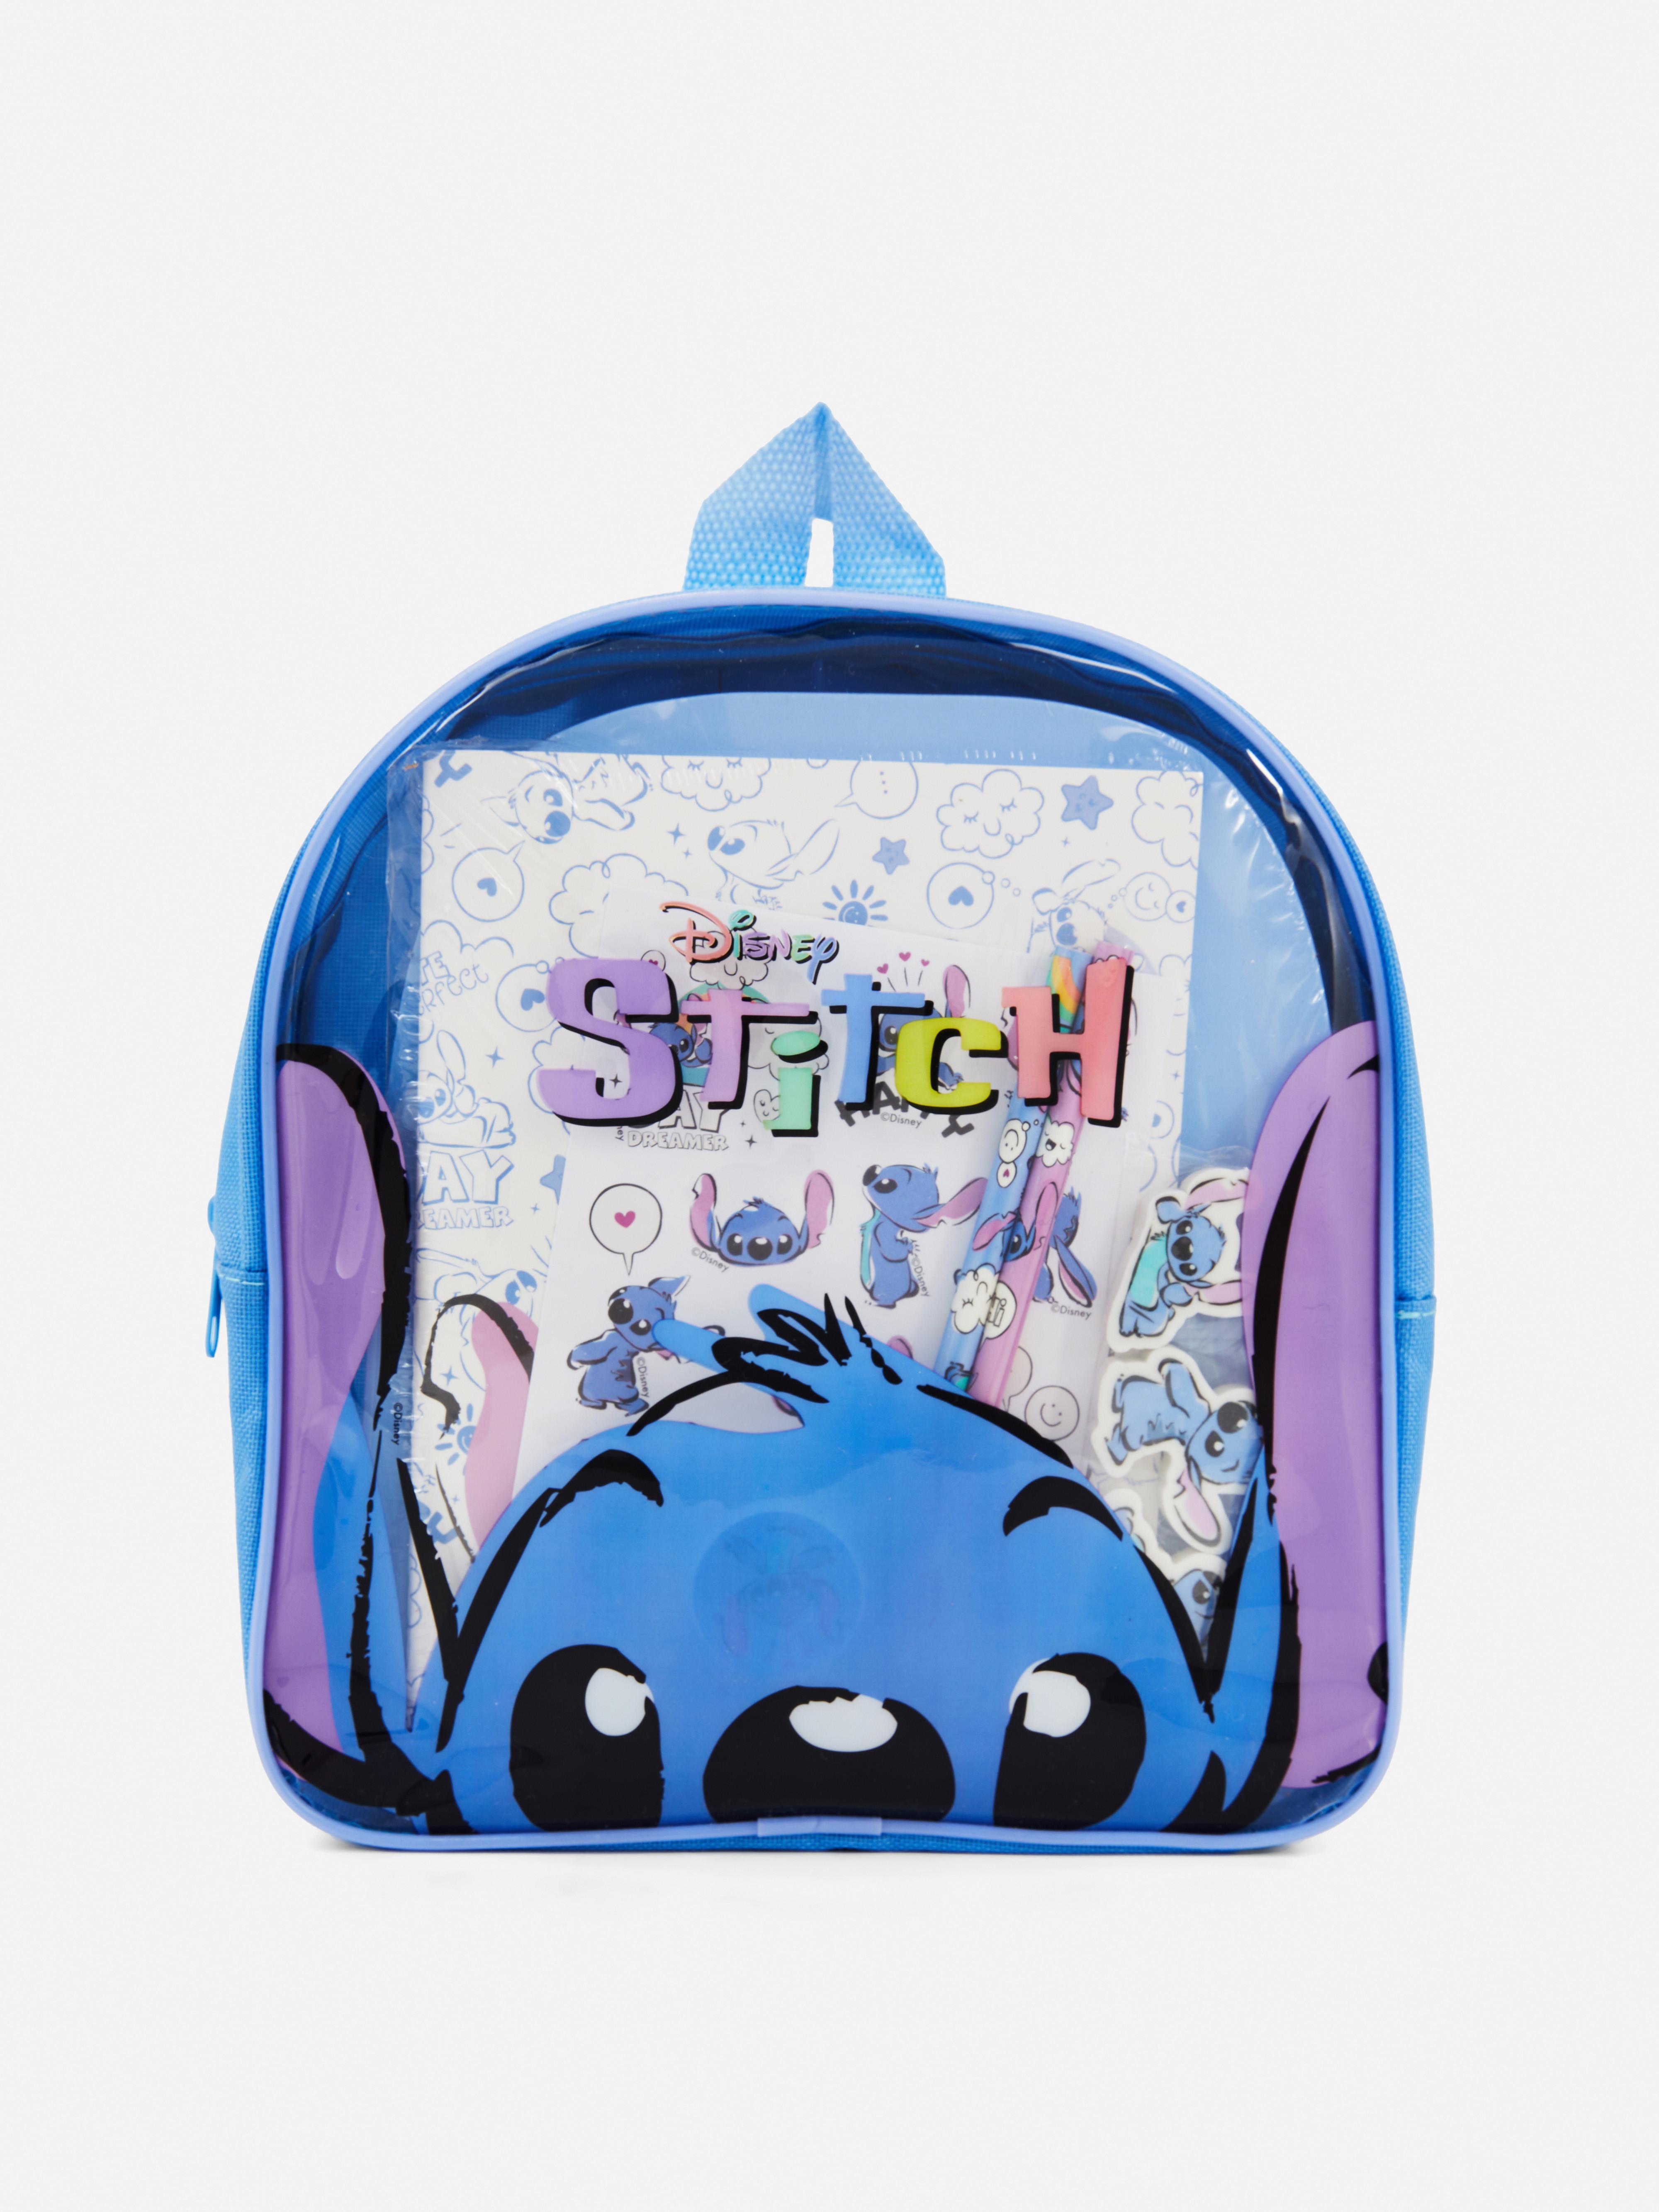 Disney’s Lilo & Stitch Stationery Backpack